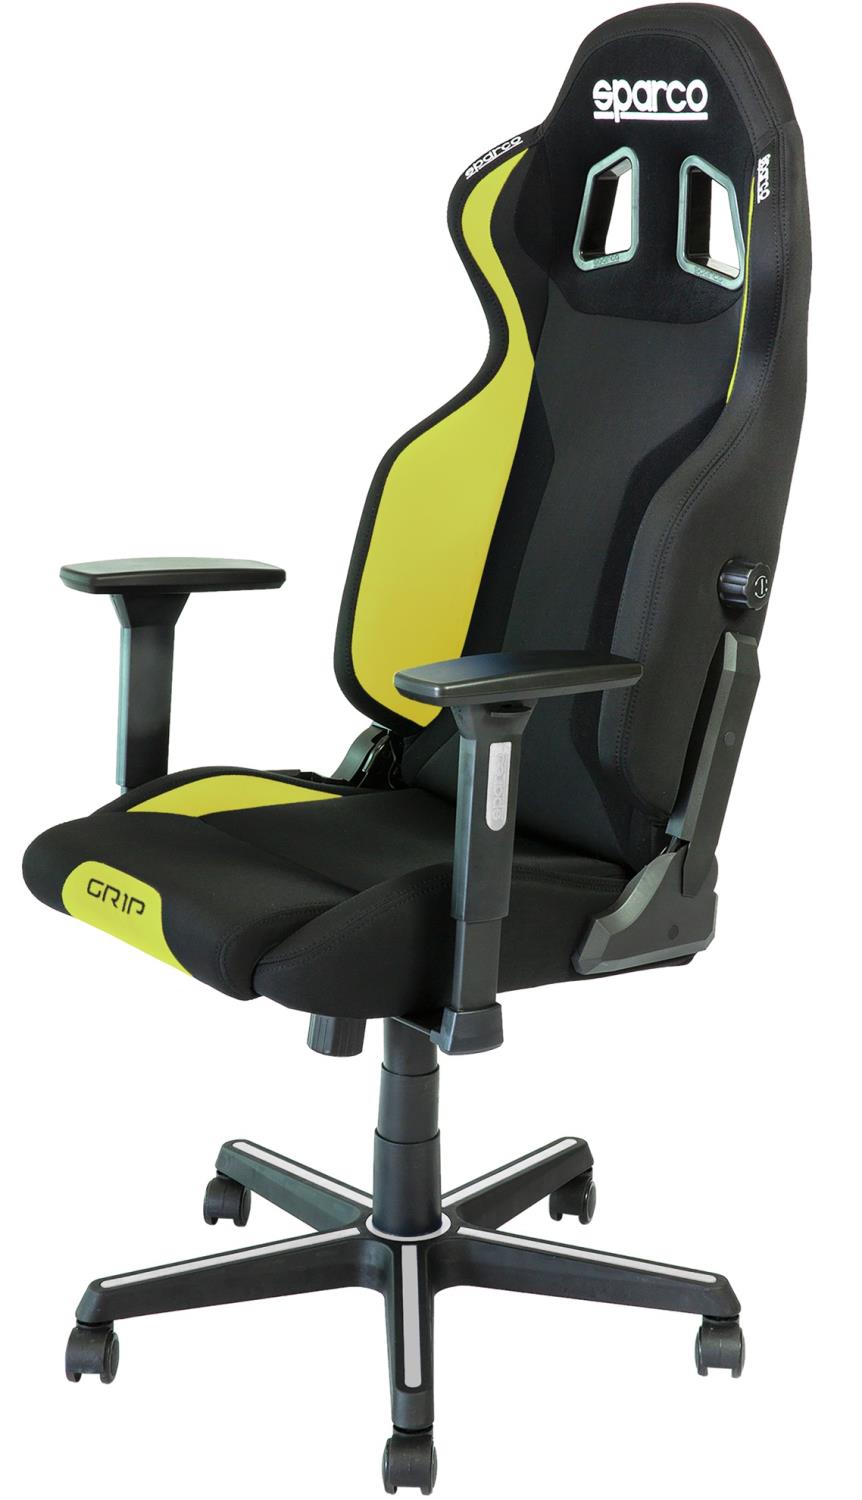 Sparco Grip Series Gaming Chair